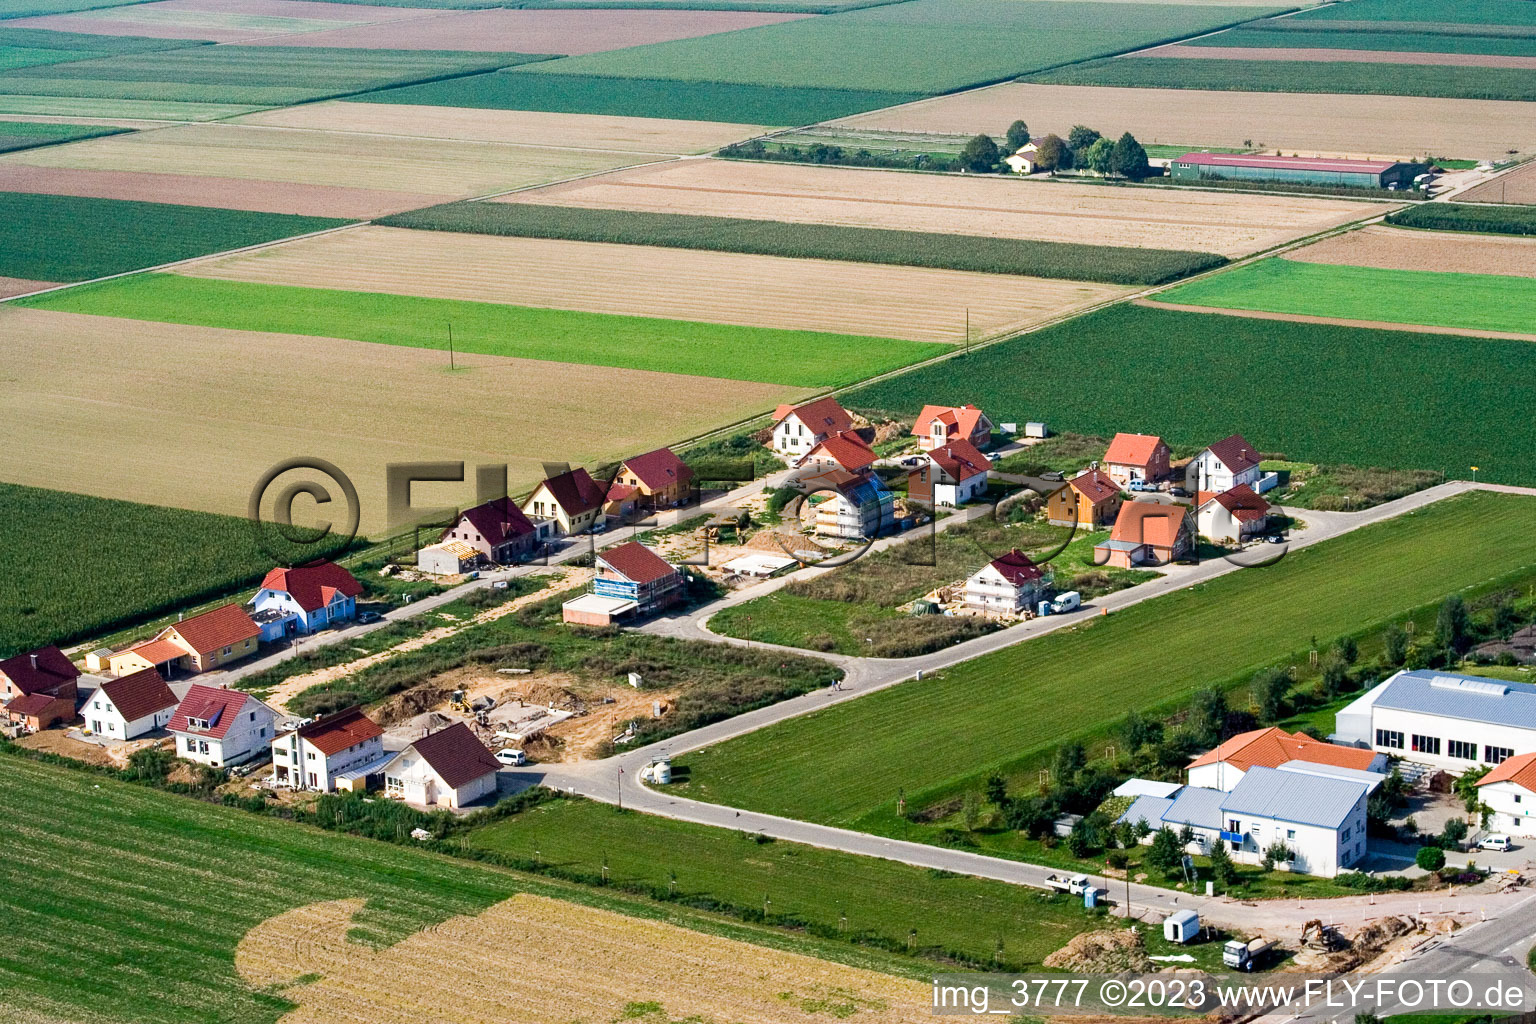 Aerial photograpy of Brotäcker new development area in Steinweiler in the state Rhineland-Palatinate, Germany